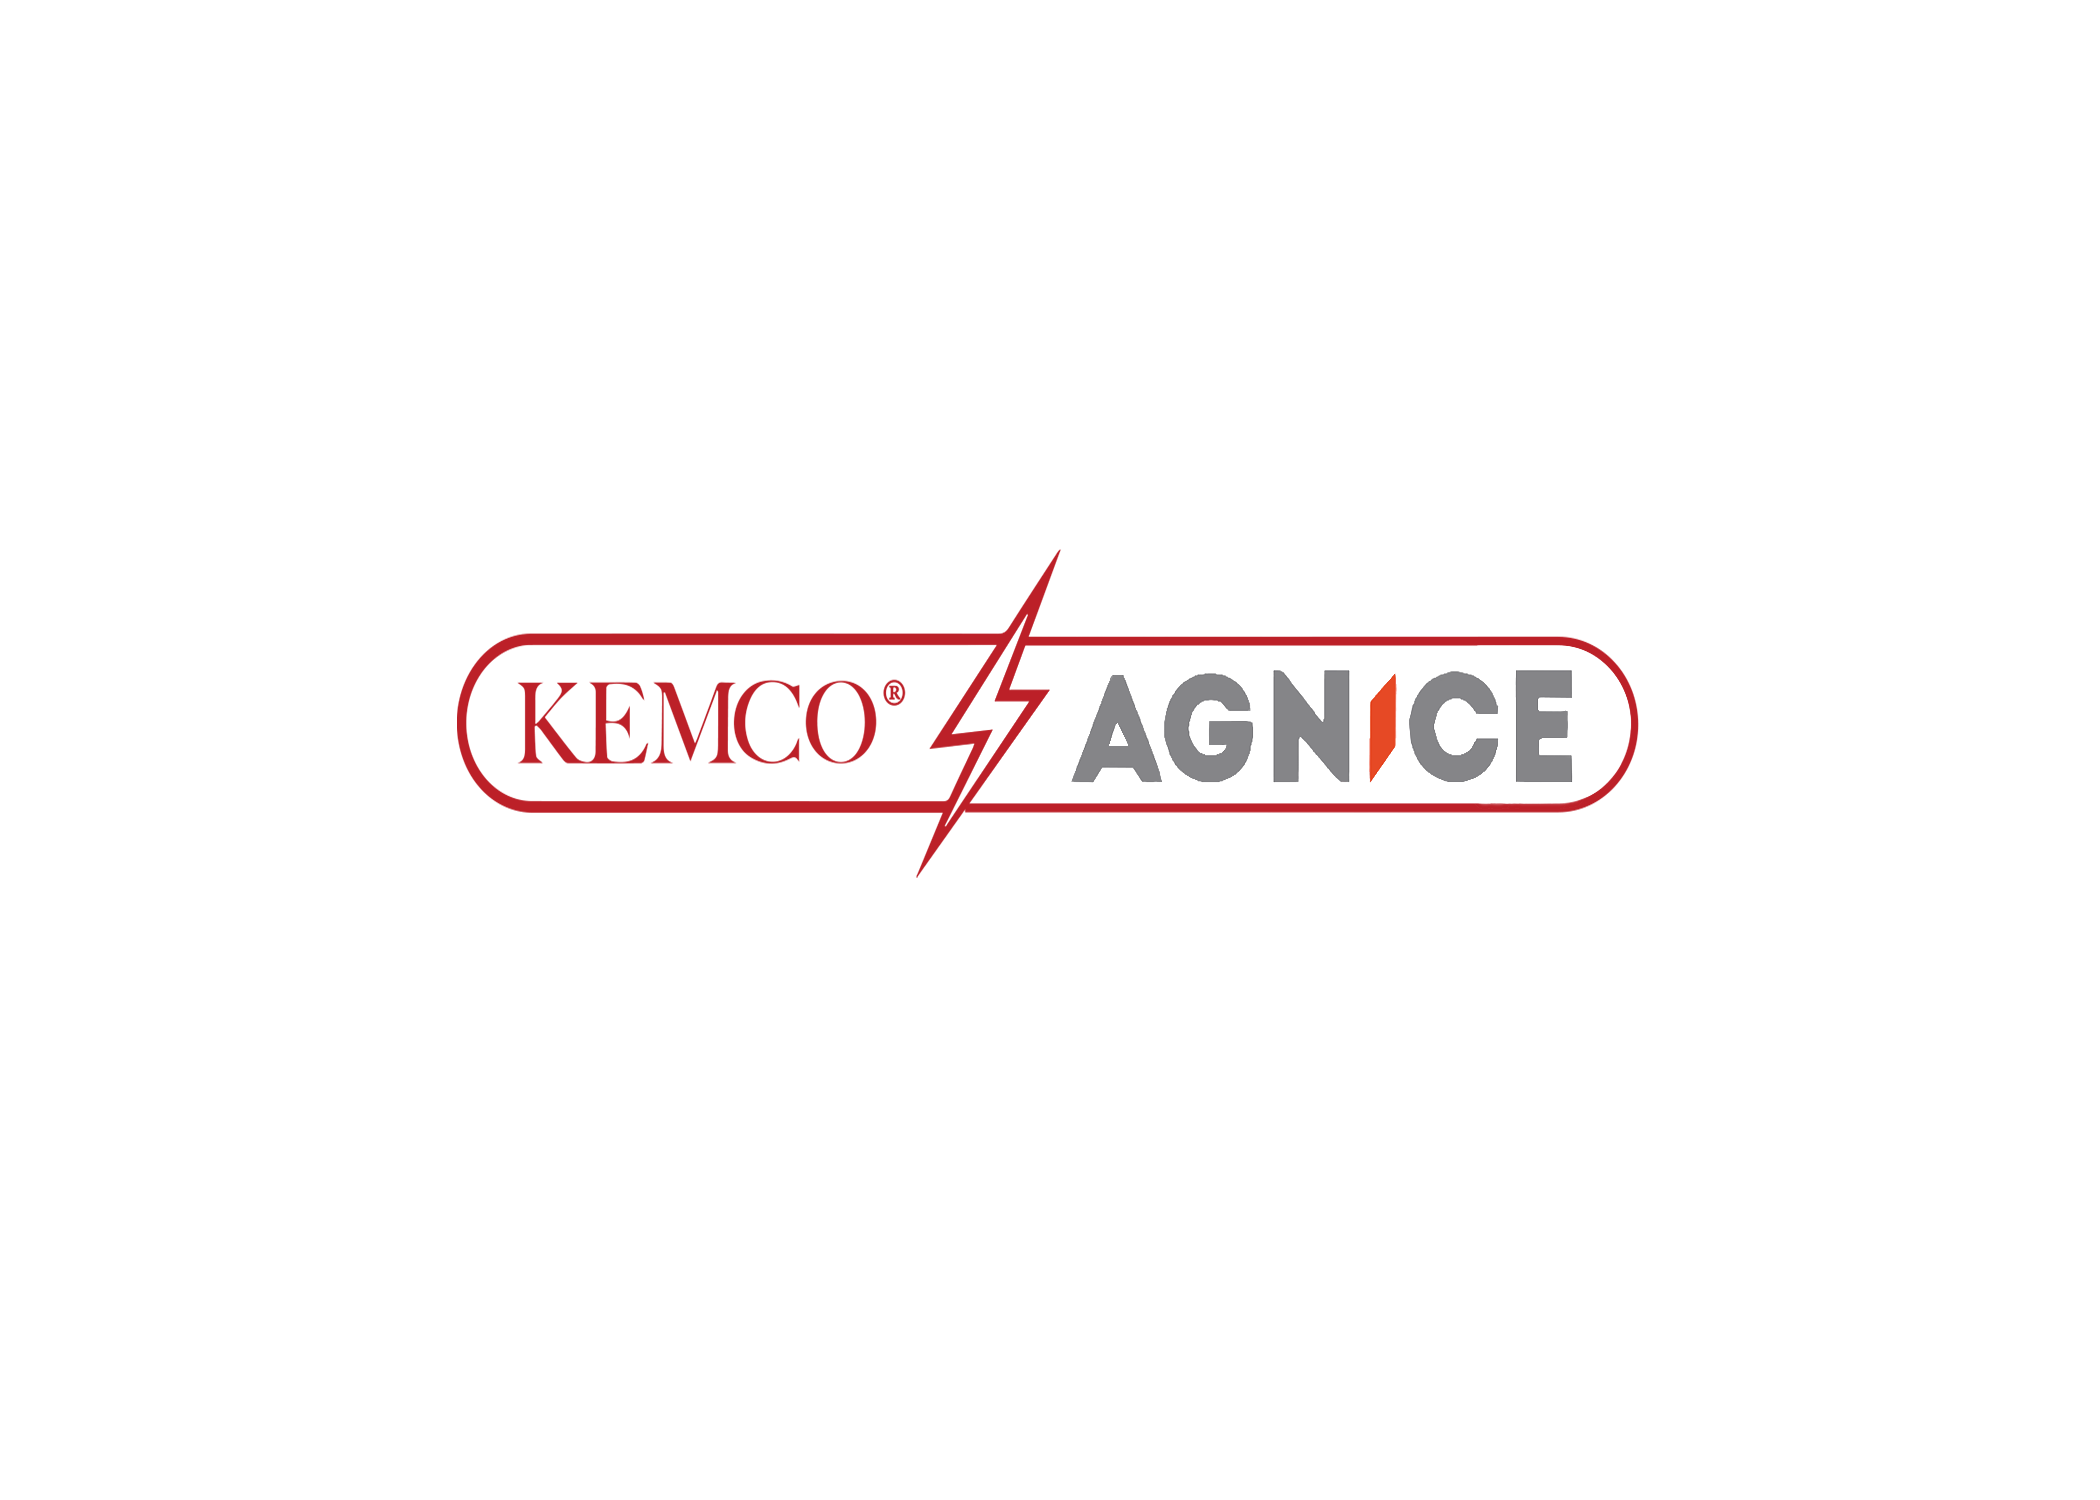 kemco-logo